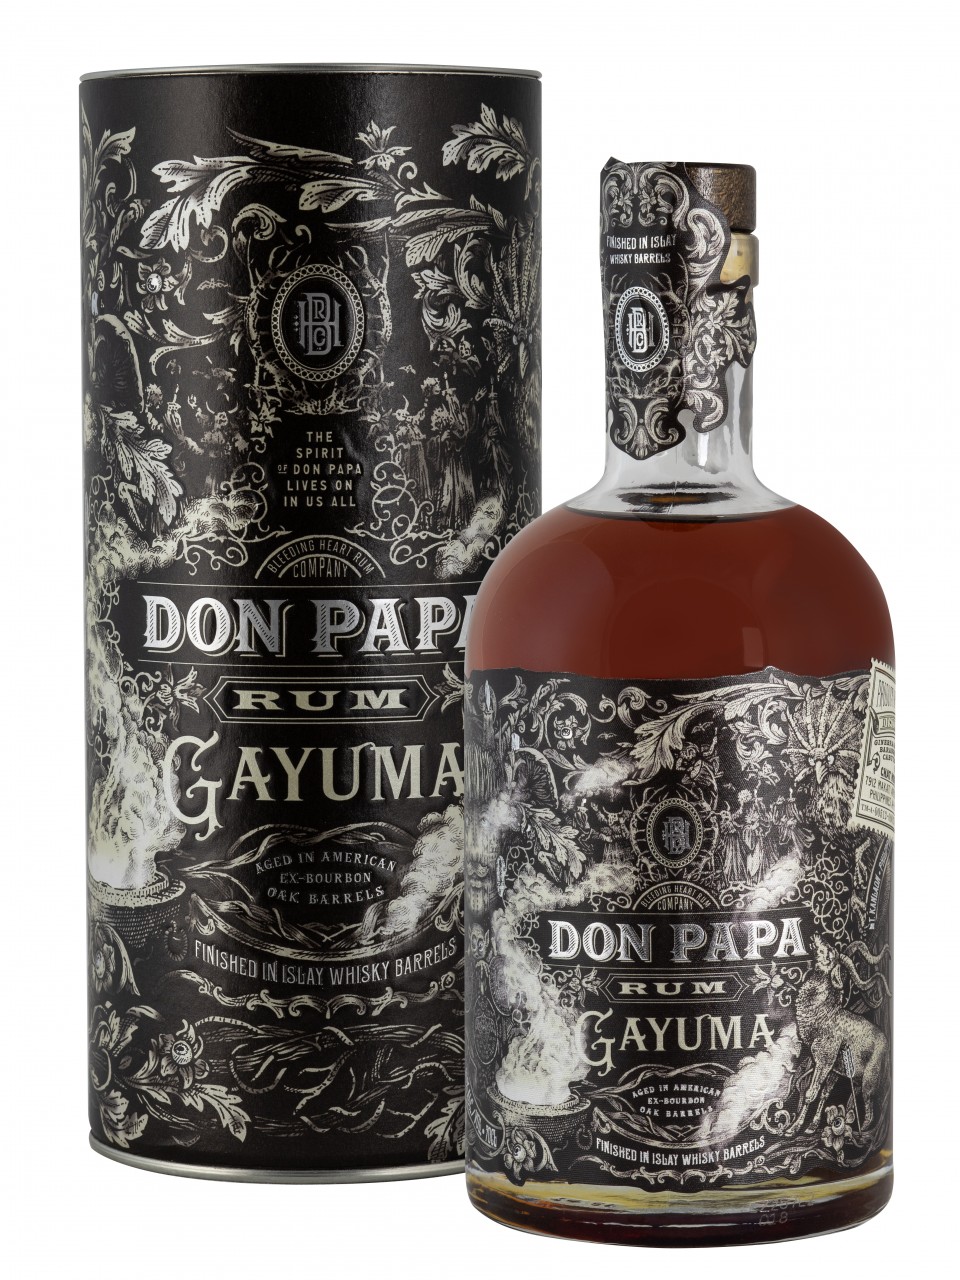 € ab Papa kaufen Don 0,7l Gayuma 84,90 43% im Preisvergleich Rum